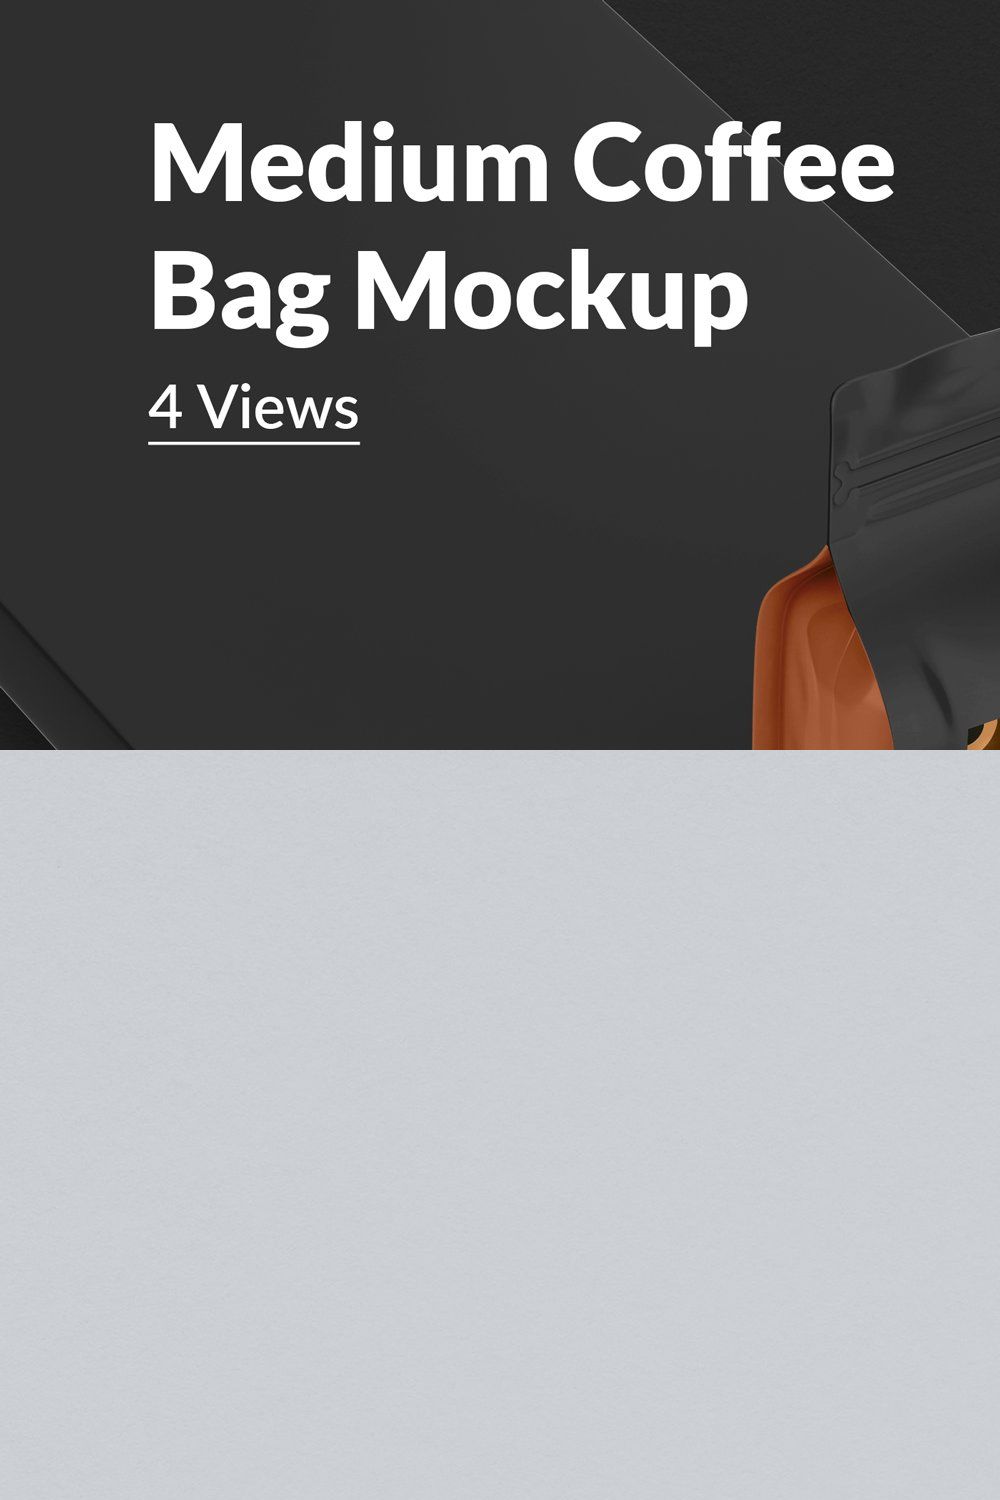 Coffee Bag Mockup (Medium Size) pinterest preview image.